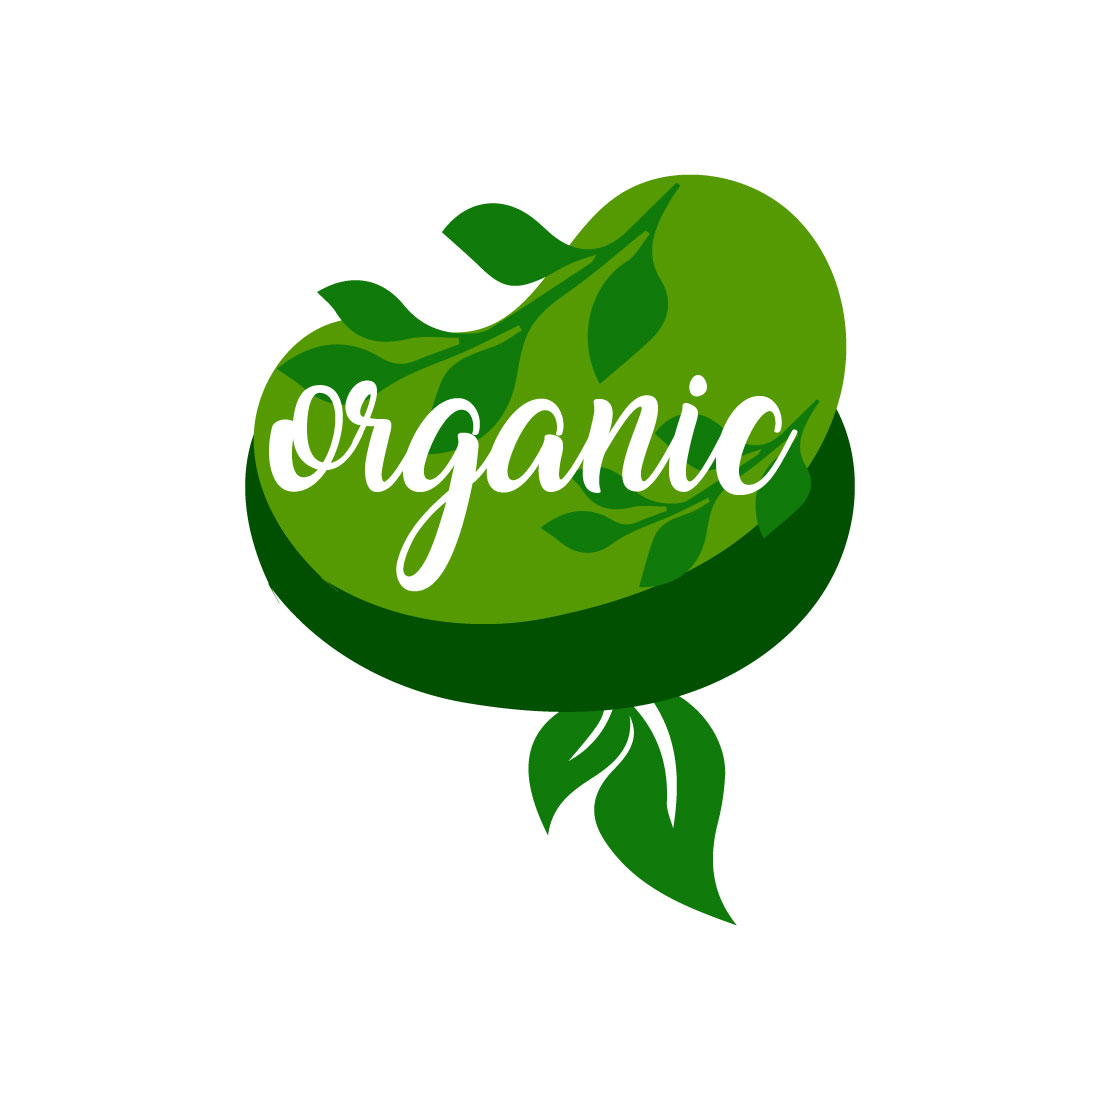 Free environmental friendly logo preview image.